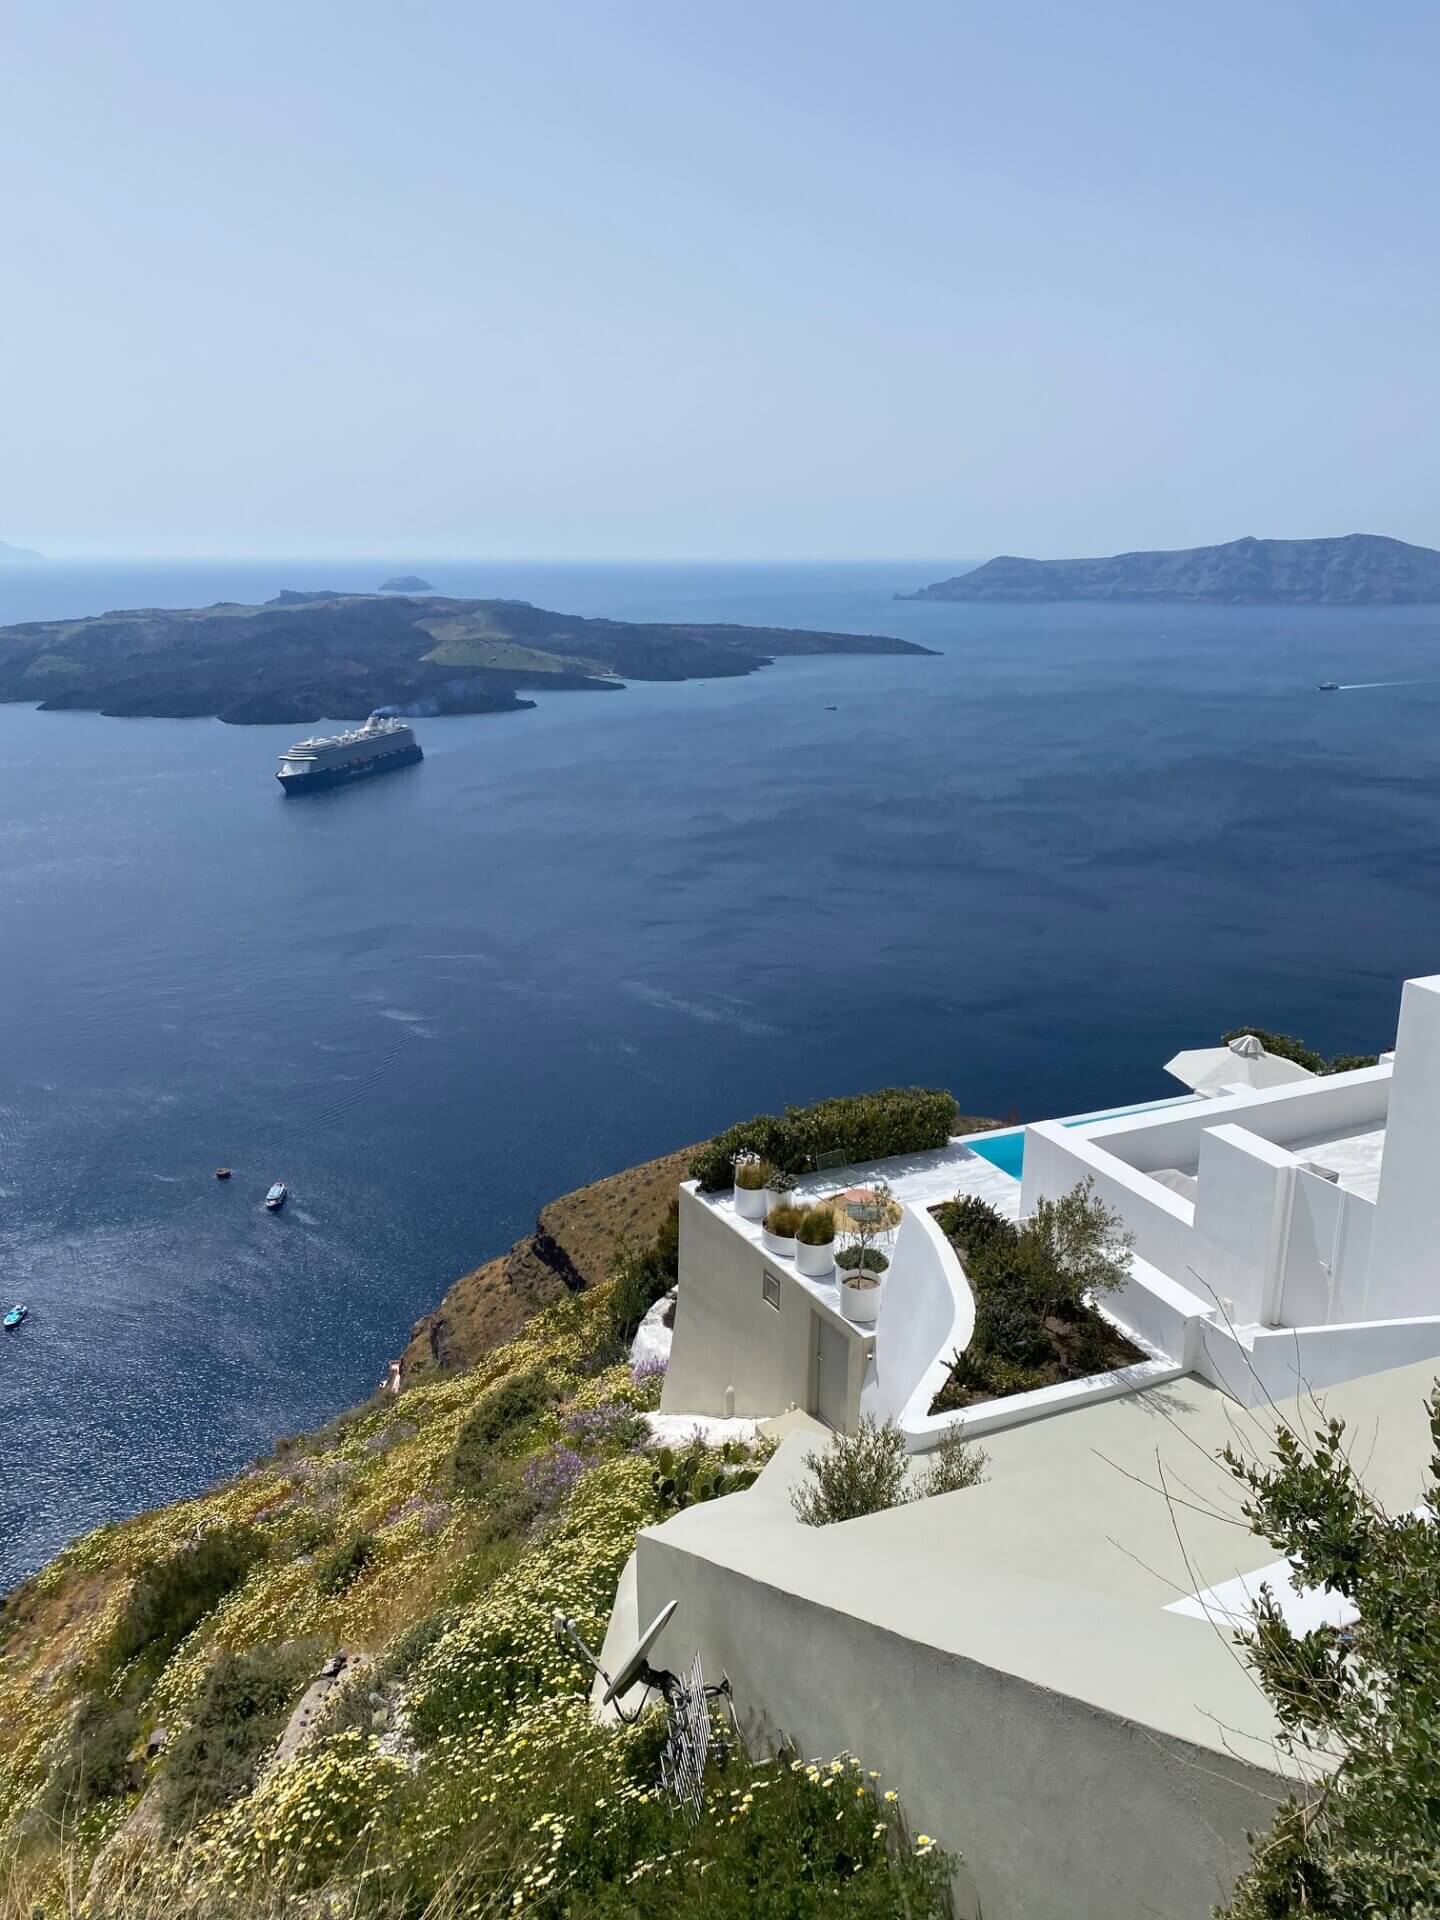 travel advice on greece